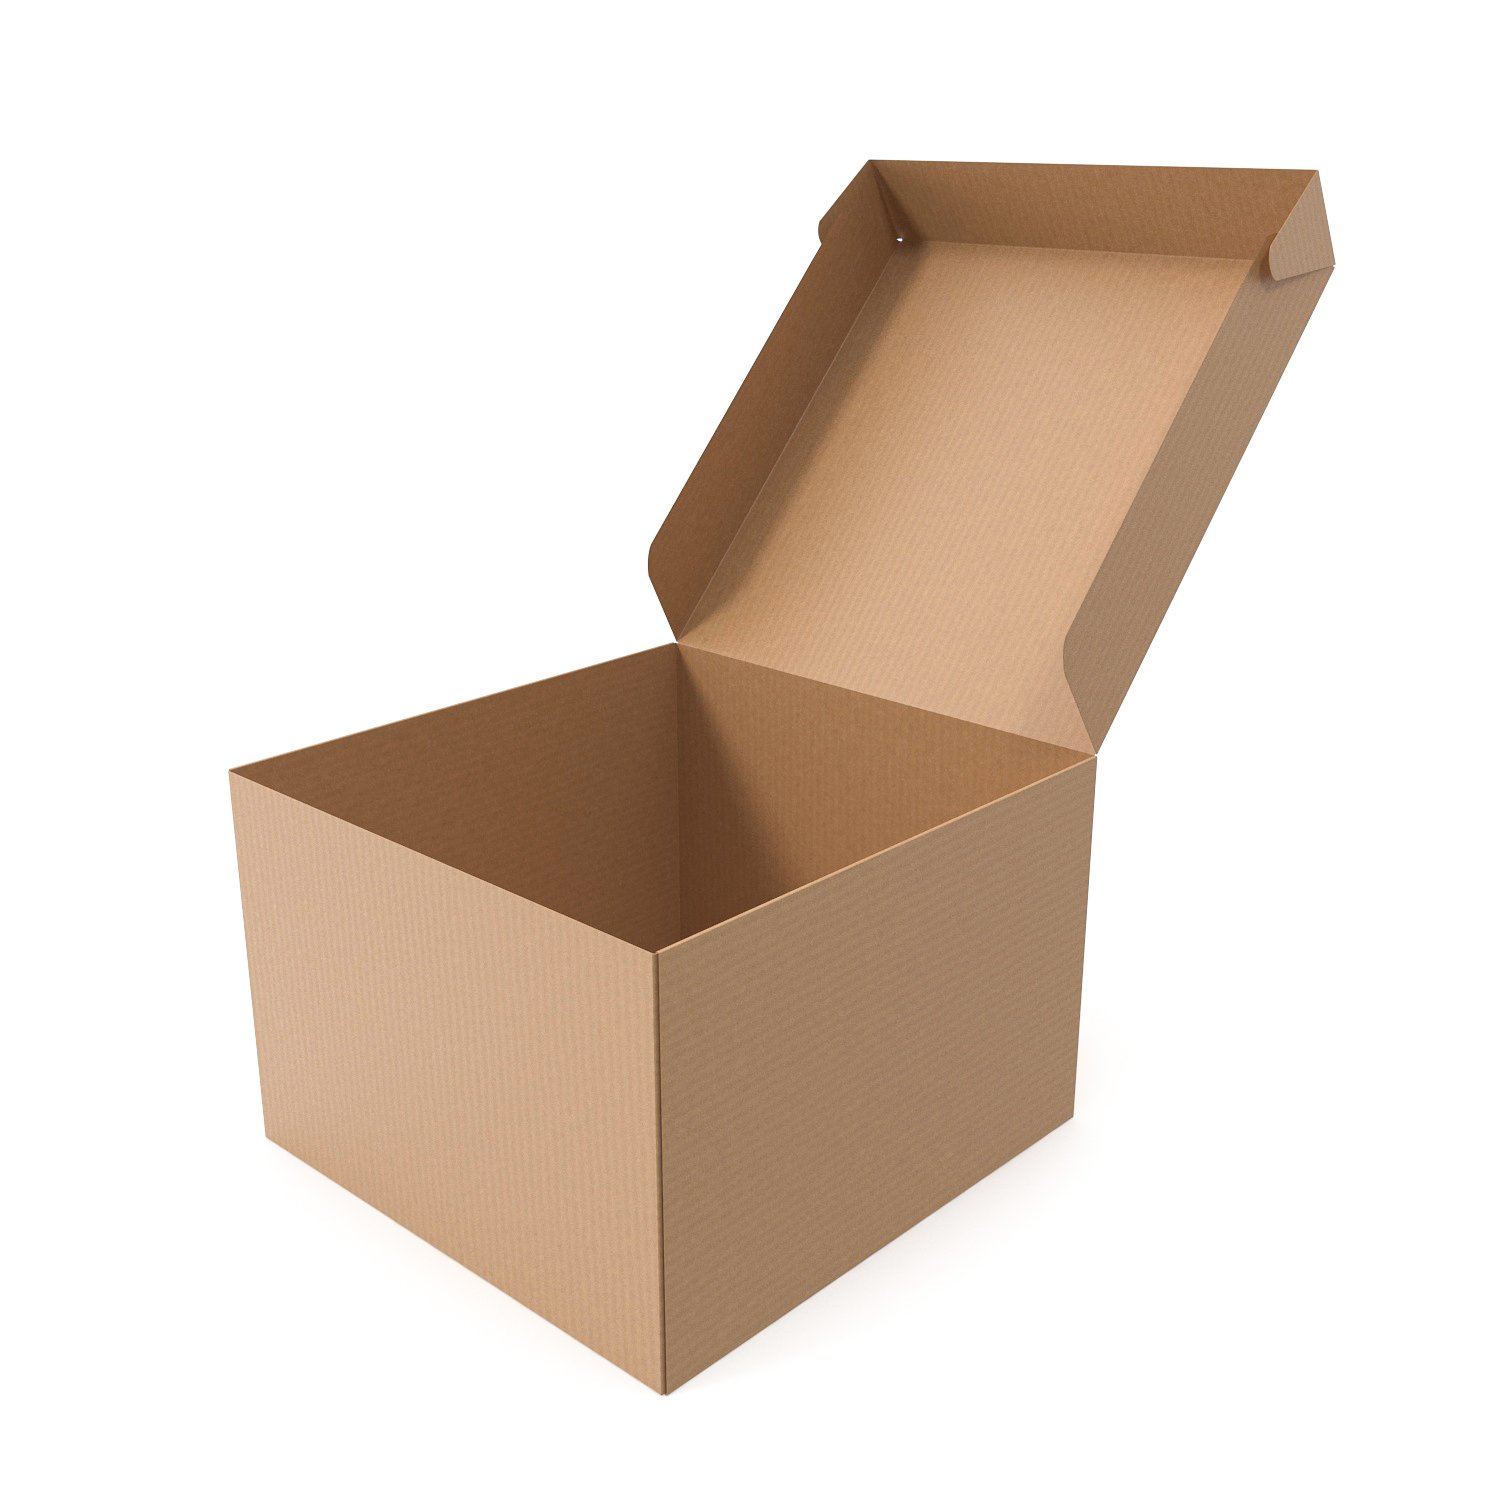 Коробка 50 50 5. Картонная коробка модель. 3d модель коробка с крышкой. Cardboard Box 3d model. Модели для картона 3д.